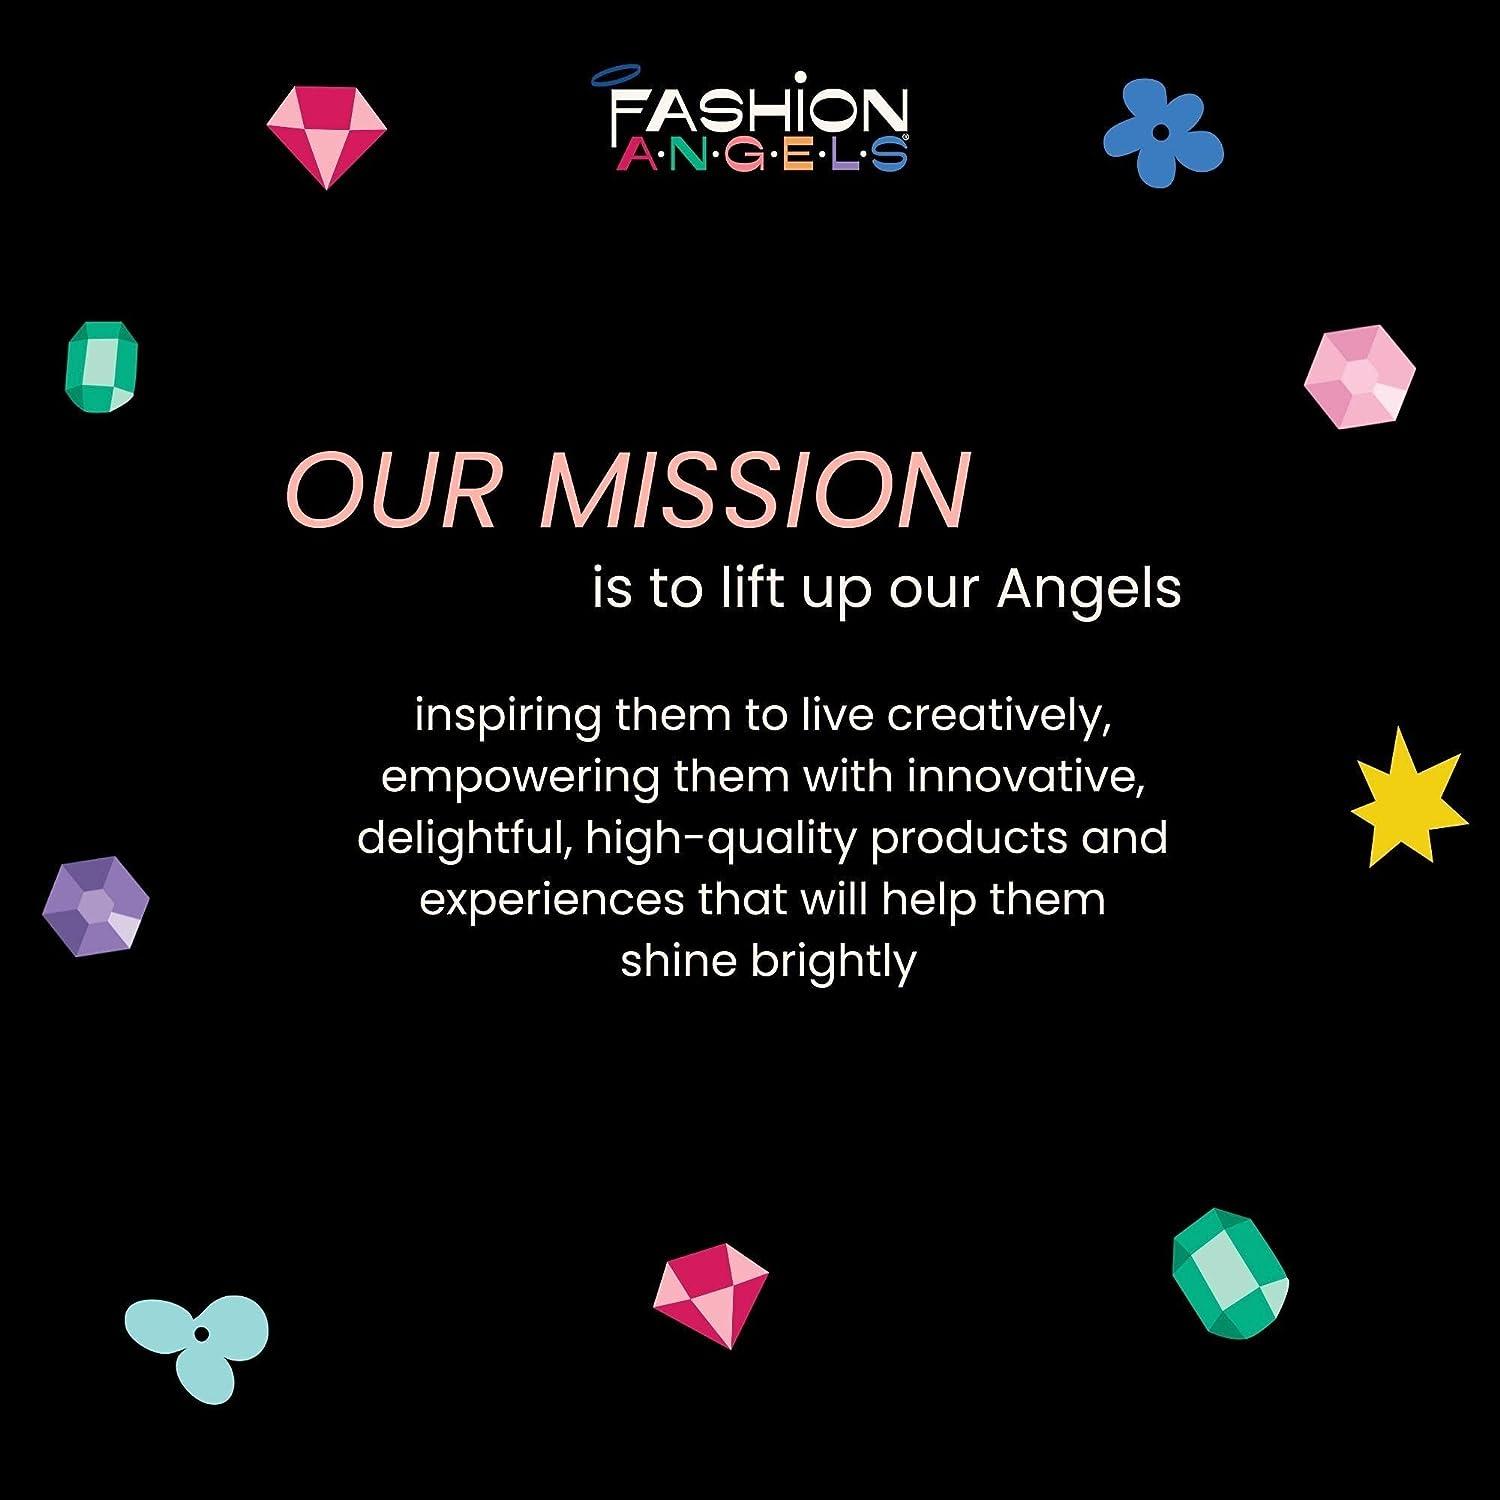 Fashion Angels Light Up Sketch Pad, LED Powered, Fashion Design